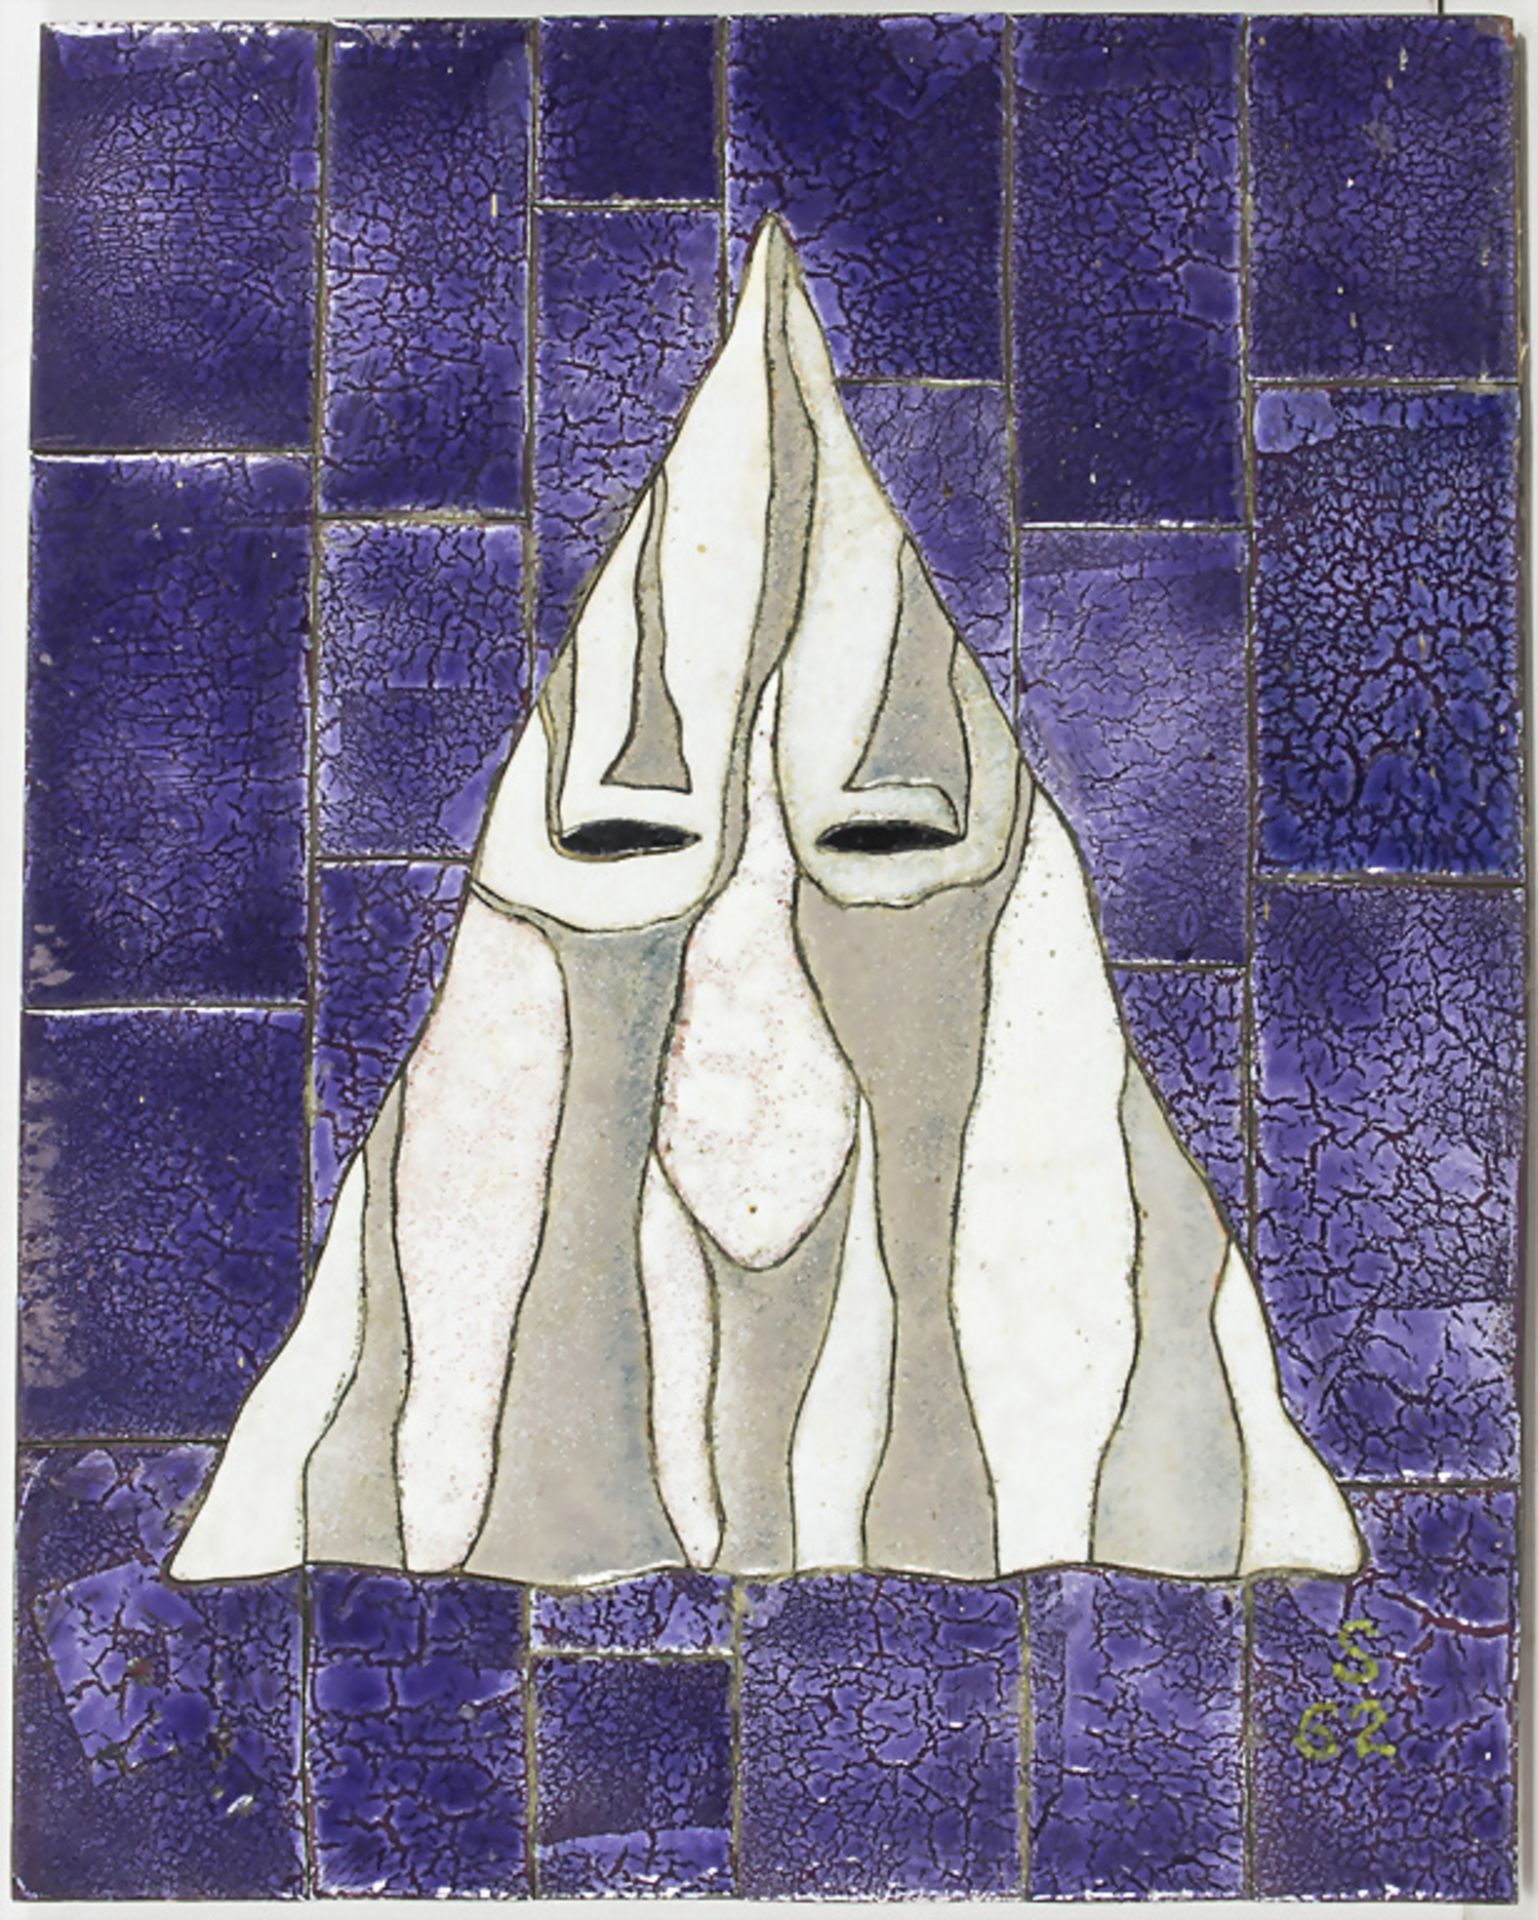 Hermann Schütte (1893-1973), Emaillebild 'Maske' / An enamel work 'Mask', 1962